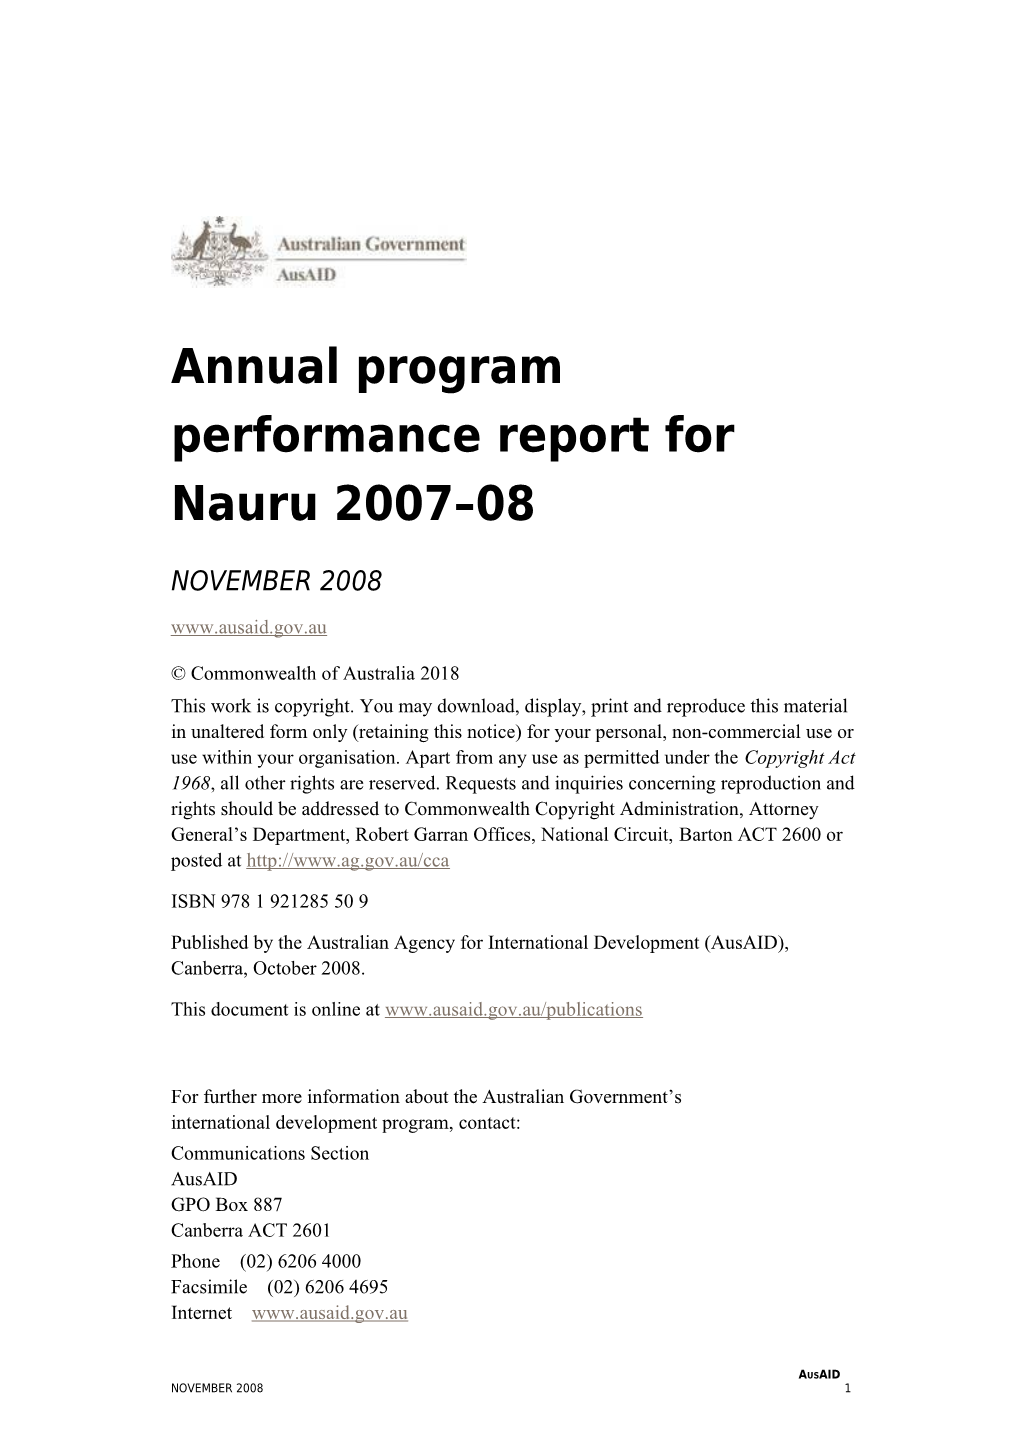 Annual Program Performance Report for Nauru 2007 2008